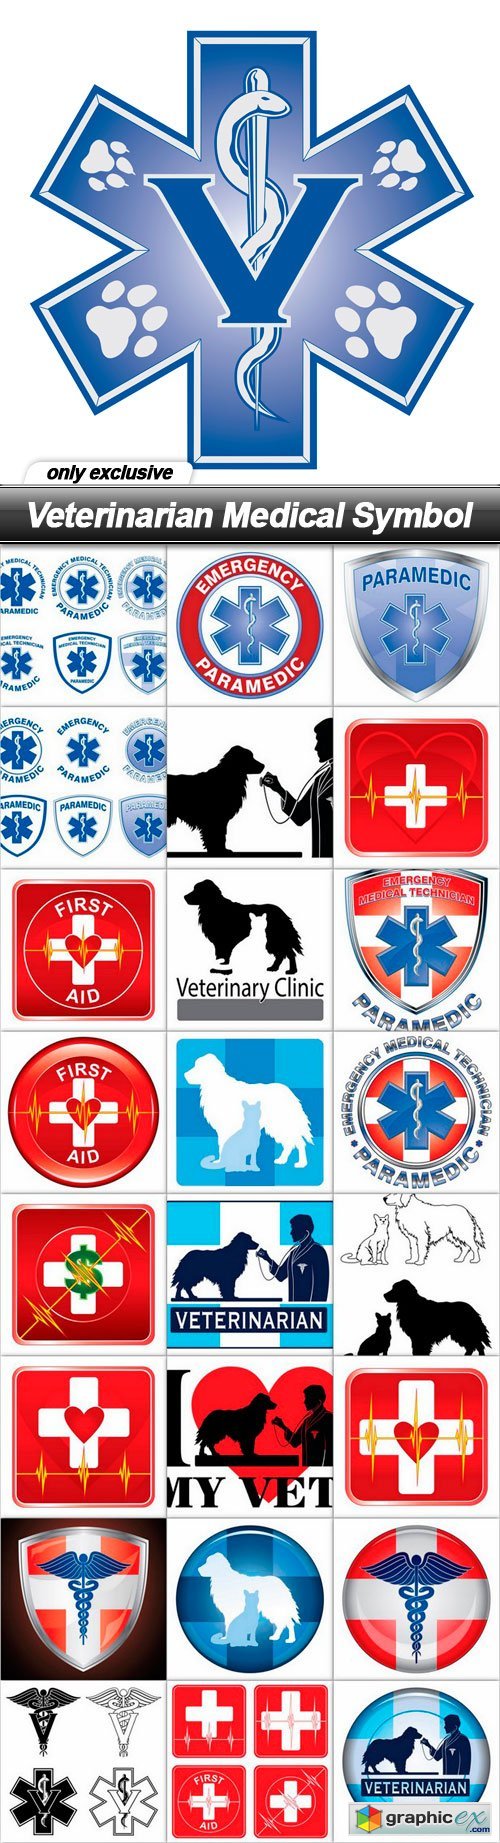 Veterinarian Medical Symbol - 25 EPS